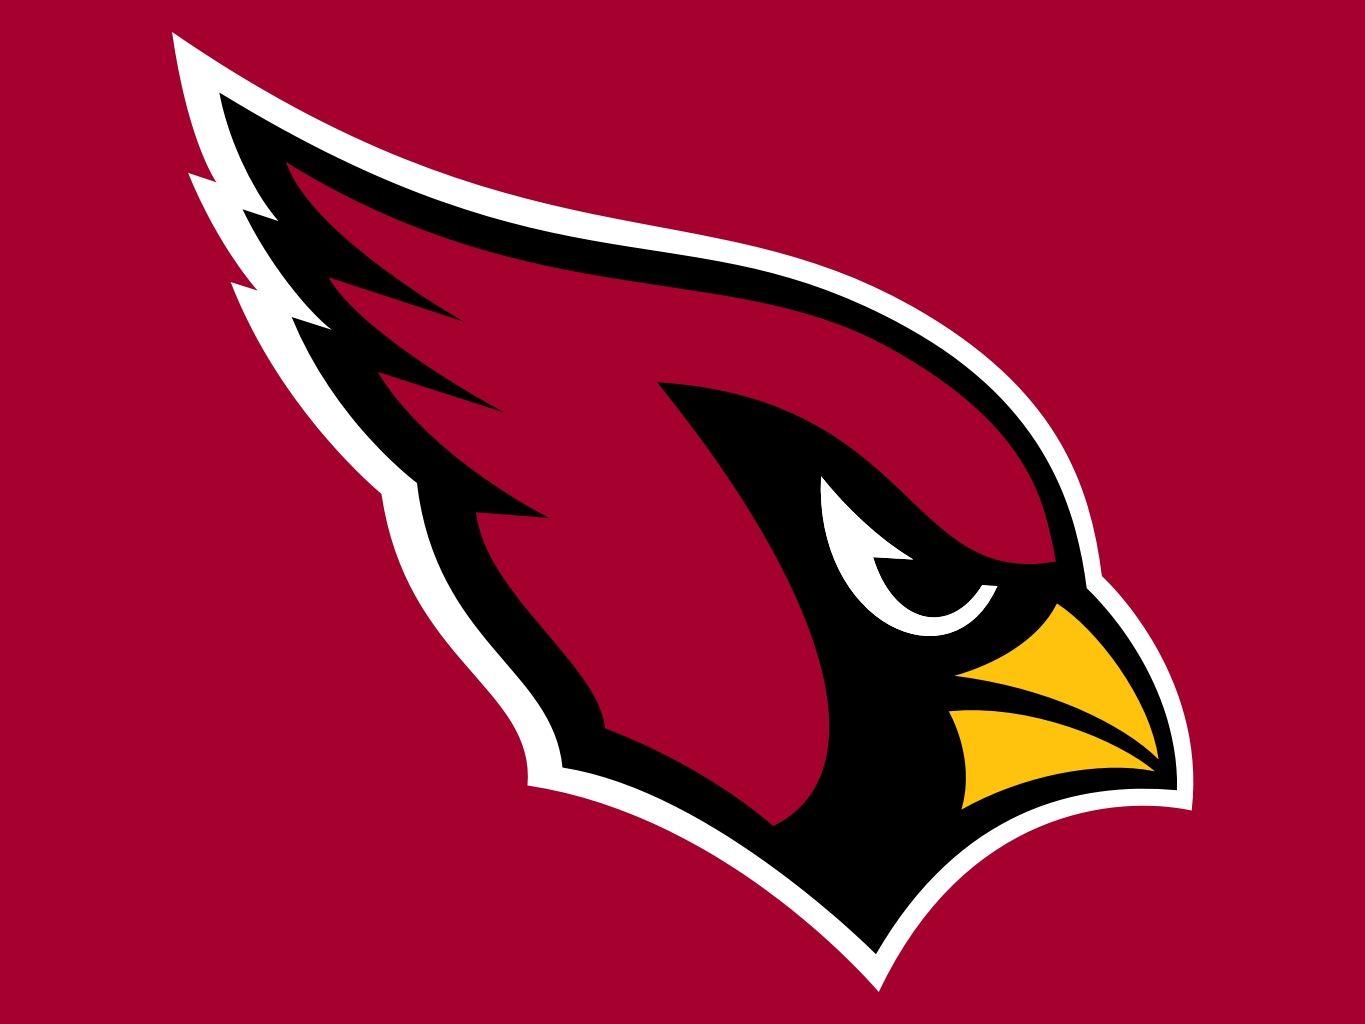 Arizona Cardinals Logo - Arizona Cardinals | Major League Sports Wiki | FANDOM powered by Wikia